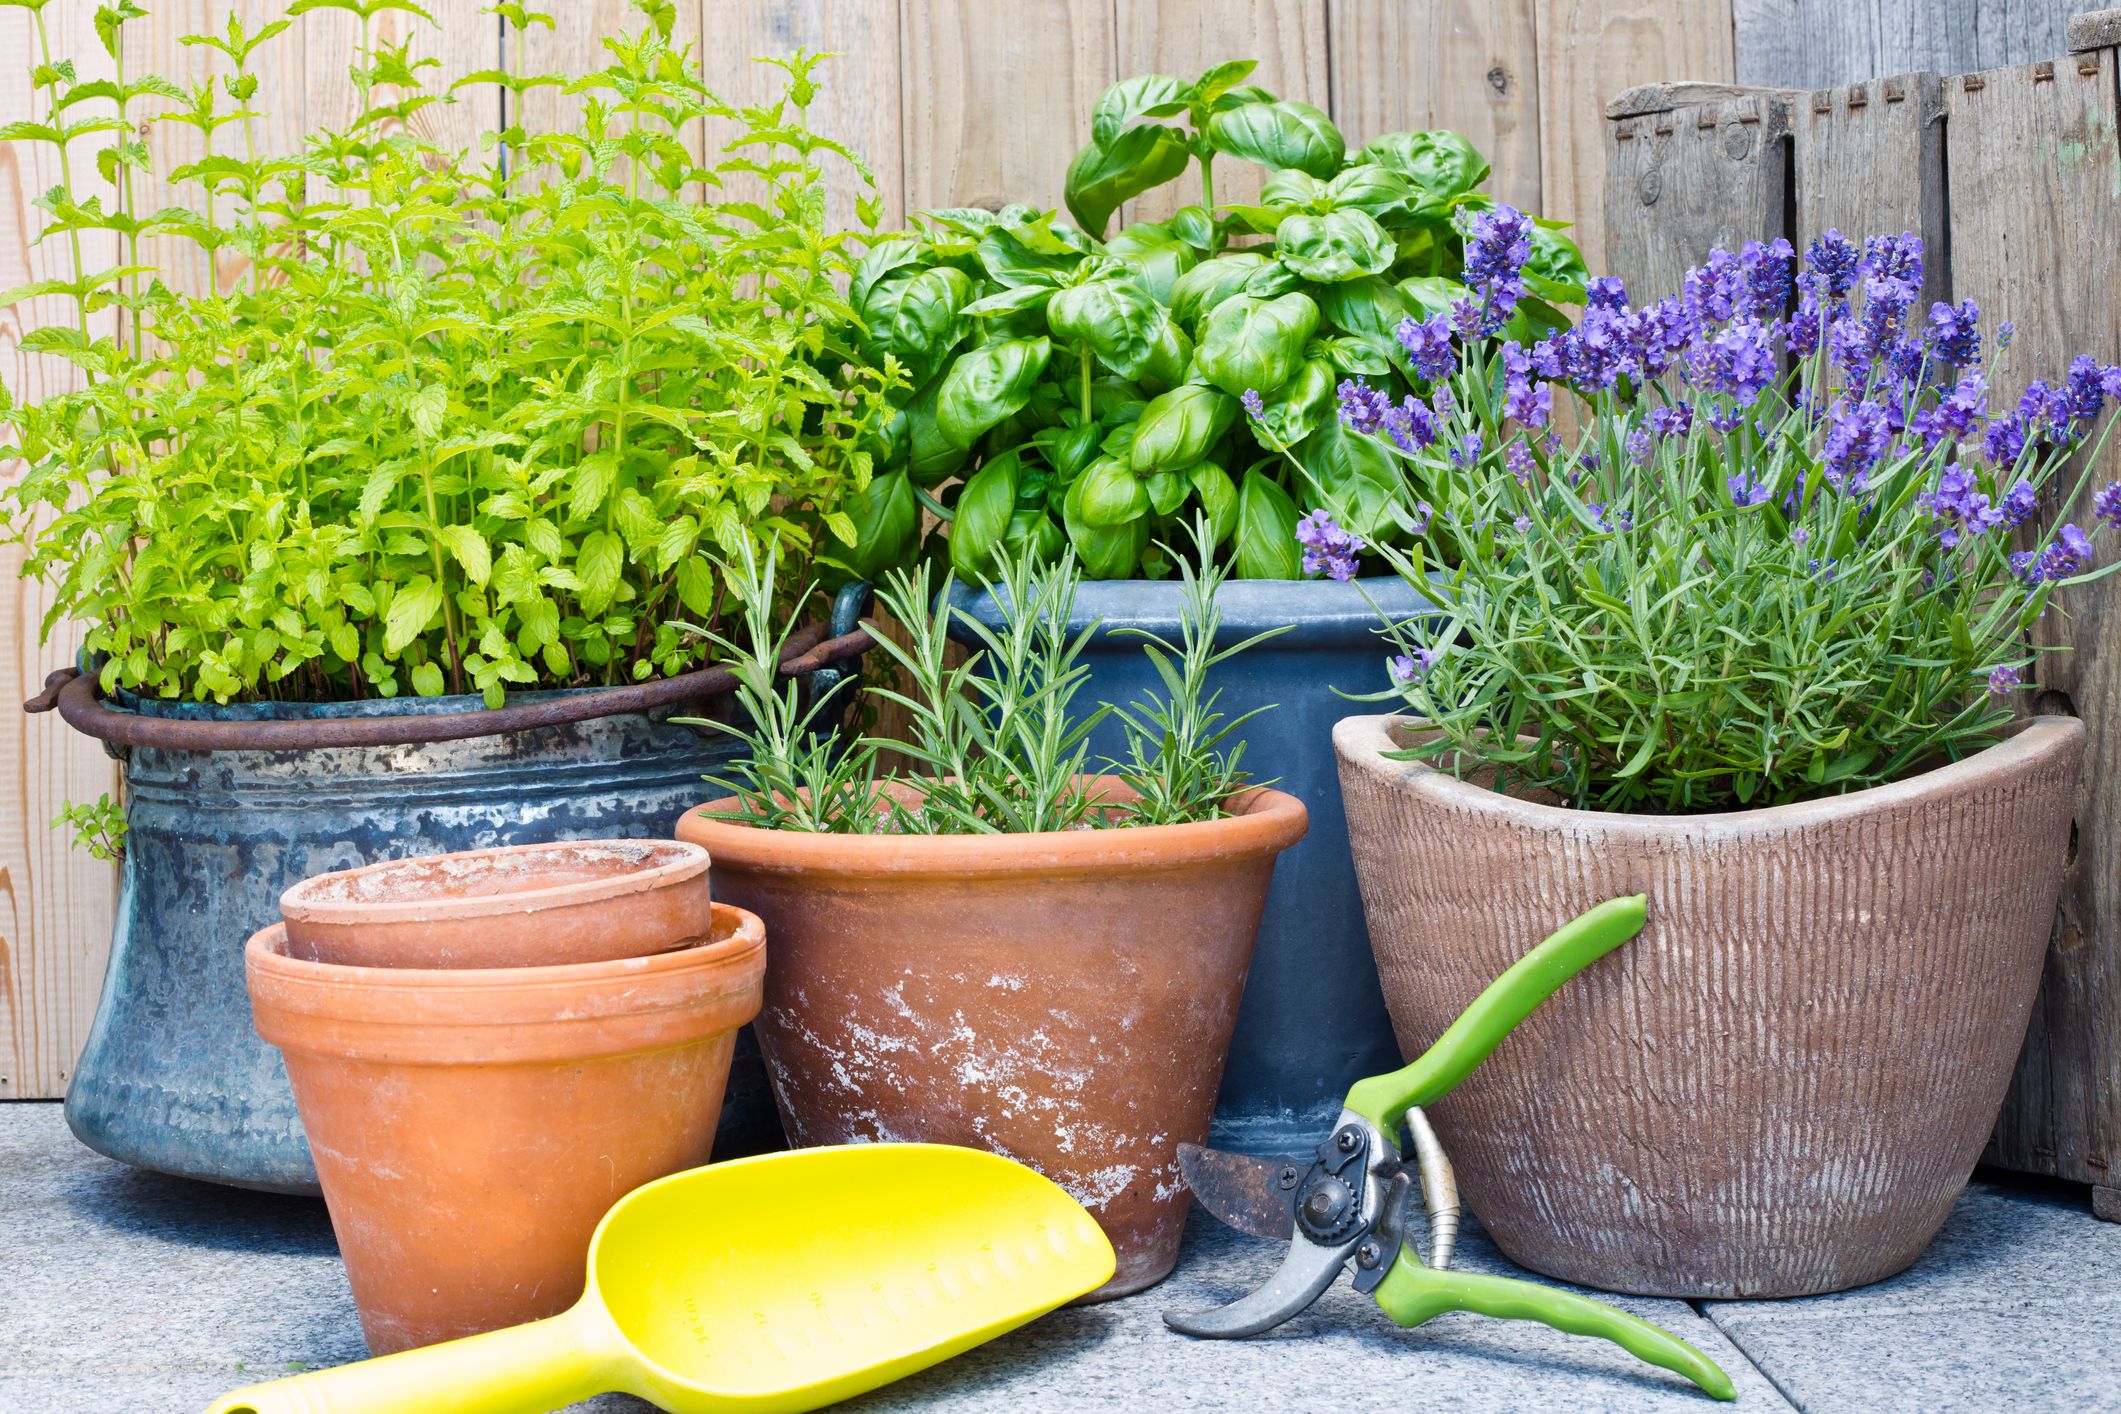 https://hips.hearstapps.com/hmg-prod/images/urban-gardening-fresh-herbs-in-clay-pots-royalty-free-image-813099580-1534172561.jpg